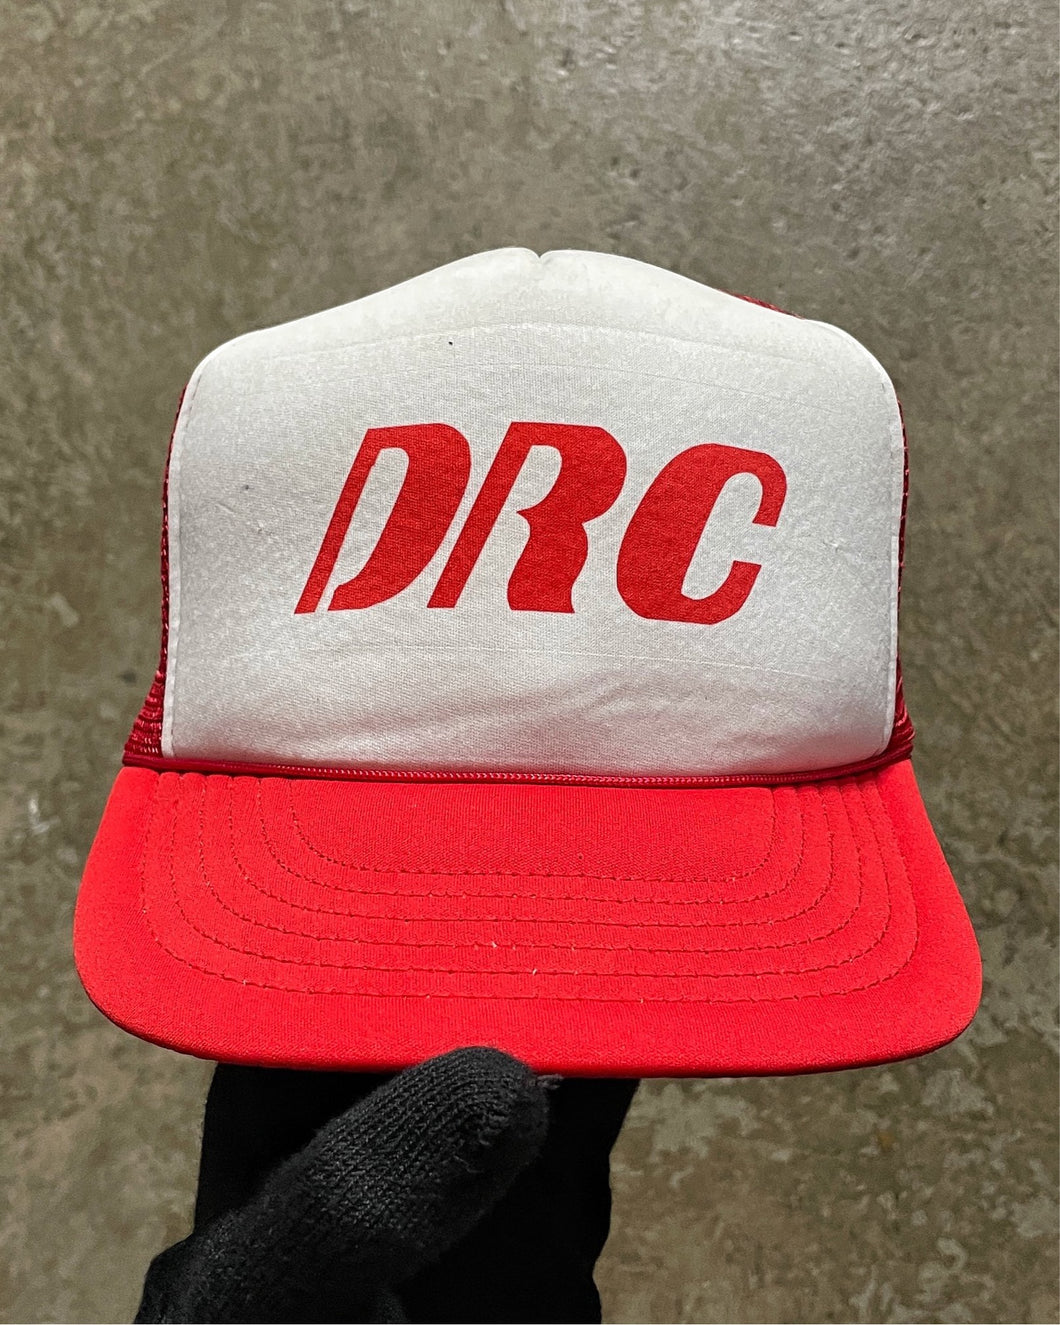 RED & WHITE “DRC” TRUCKER HAT - 1990S